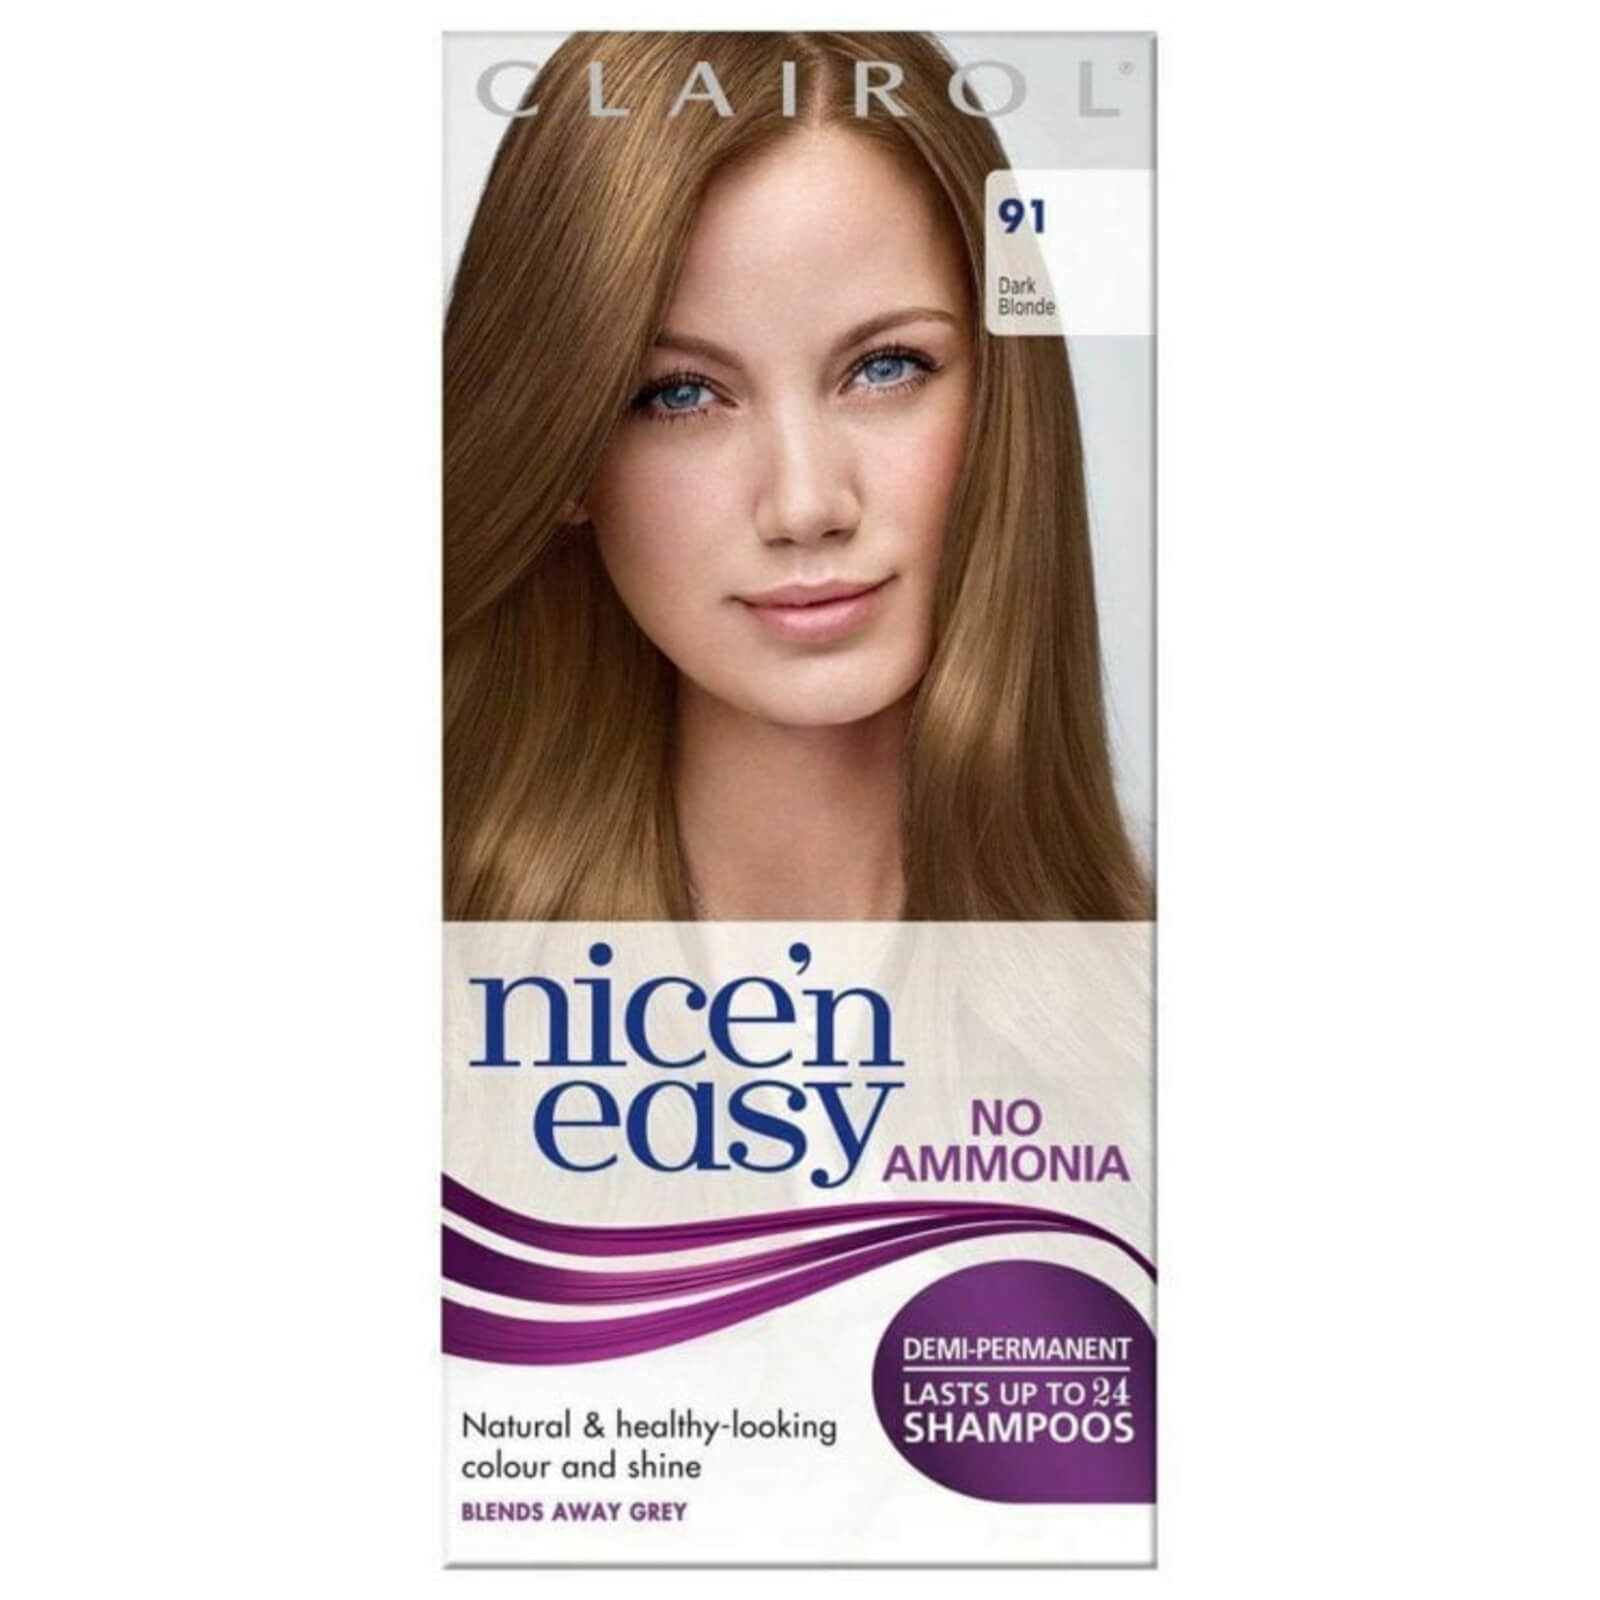 Clairol Nice'n Easy Semi-Permanent Hair Dye with No Ammonia (Various Shades) - 91 Dark Blonde product